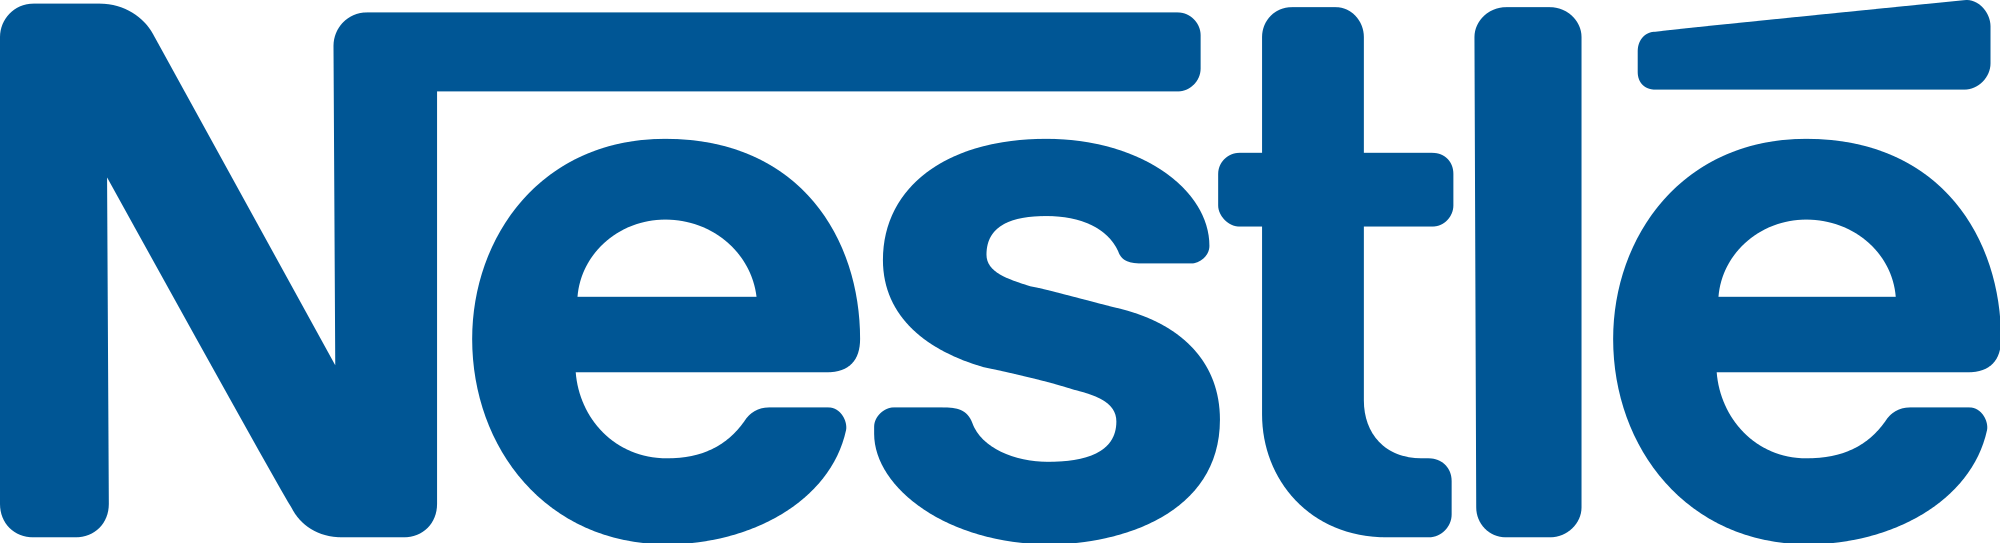 Nestlé Diversity Leadership Symposium August 16-17, - Transparent Background Nestle Logo (2000x543)